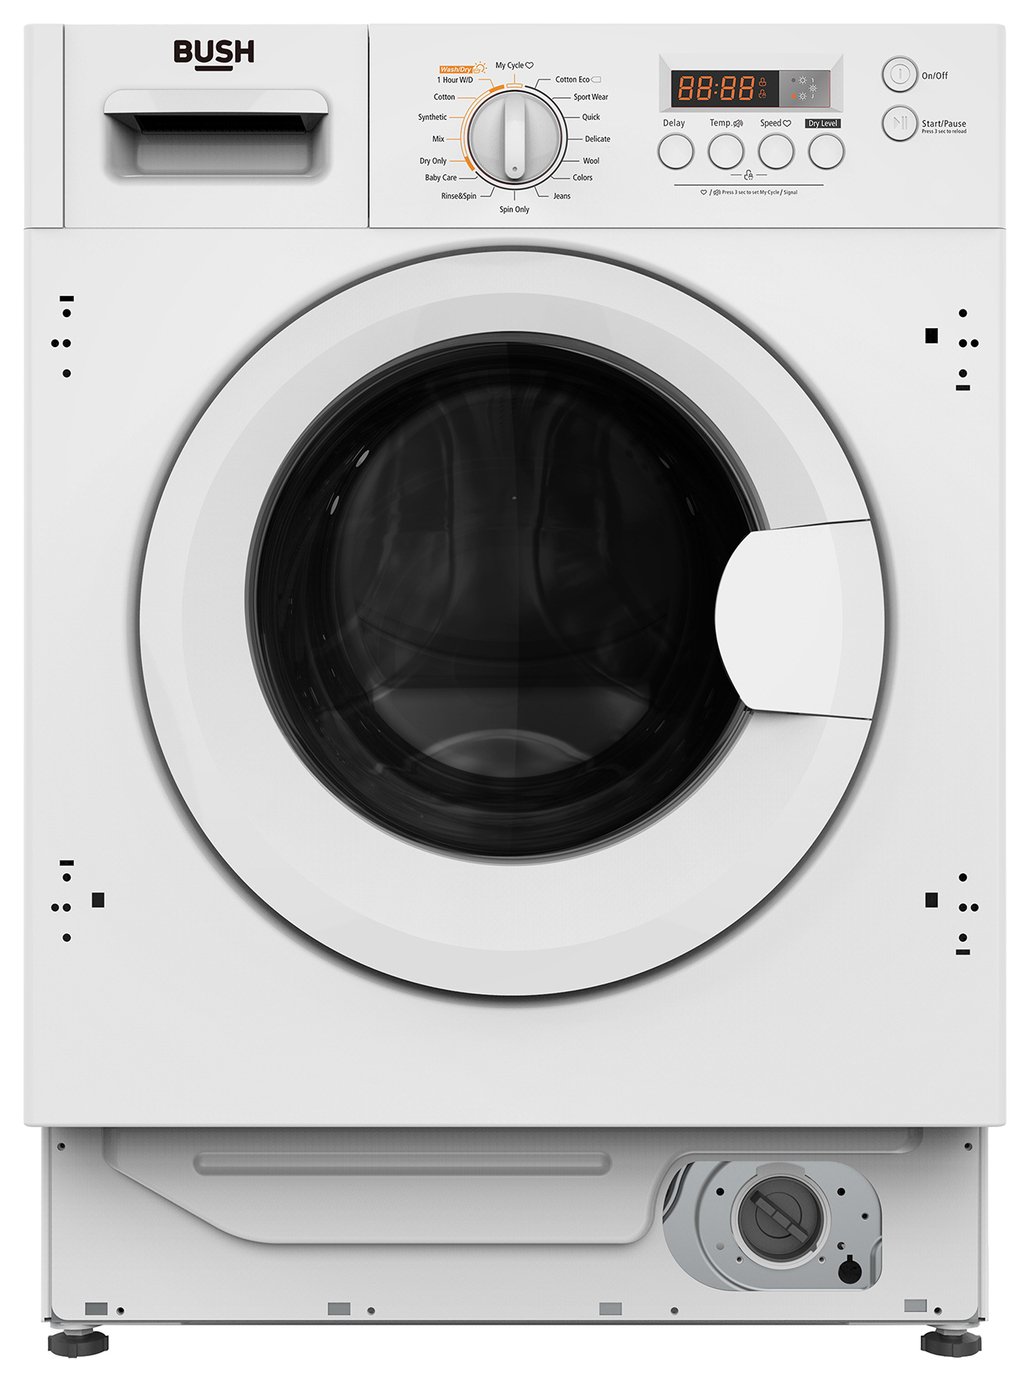 Bush WDDFINT 8KG / 6KG 1400 Integrated Washer Dryer - White